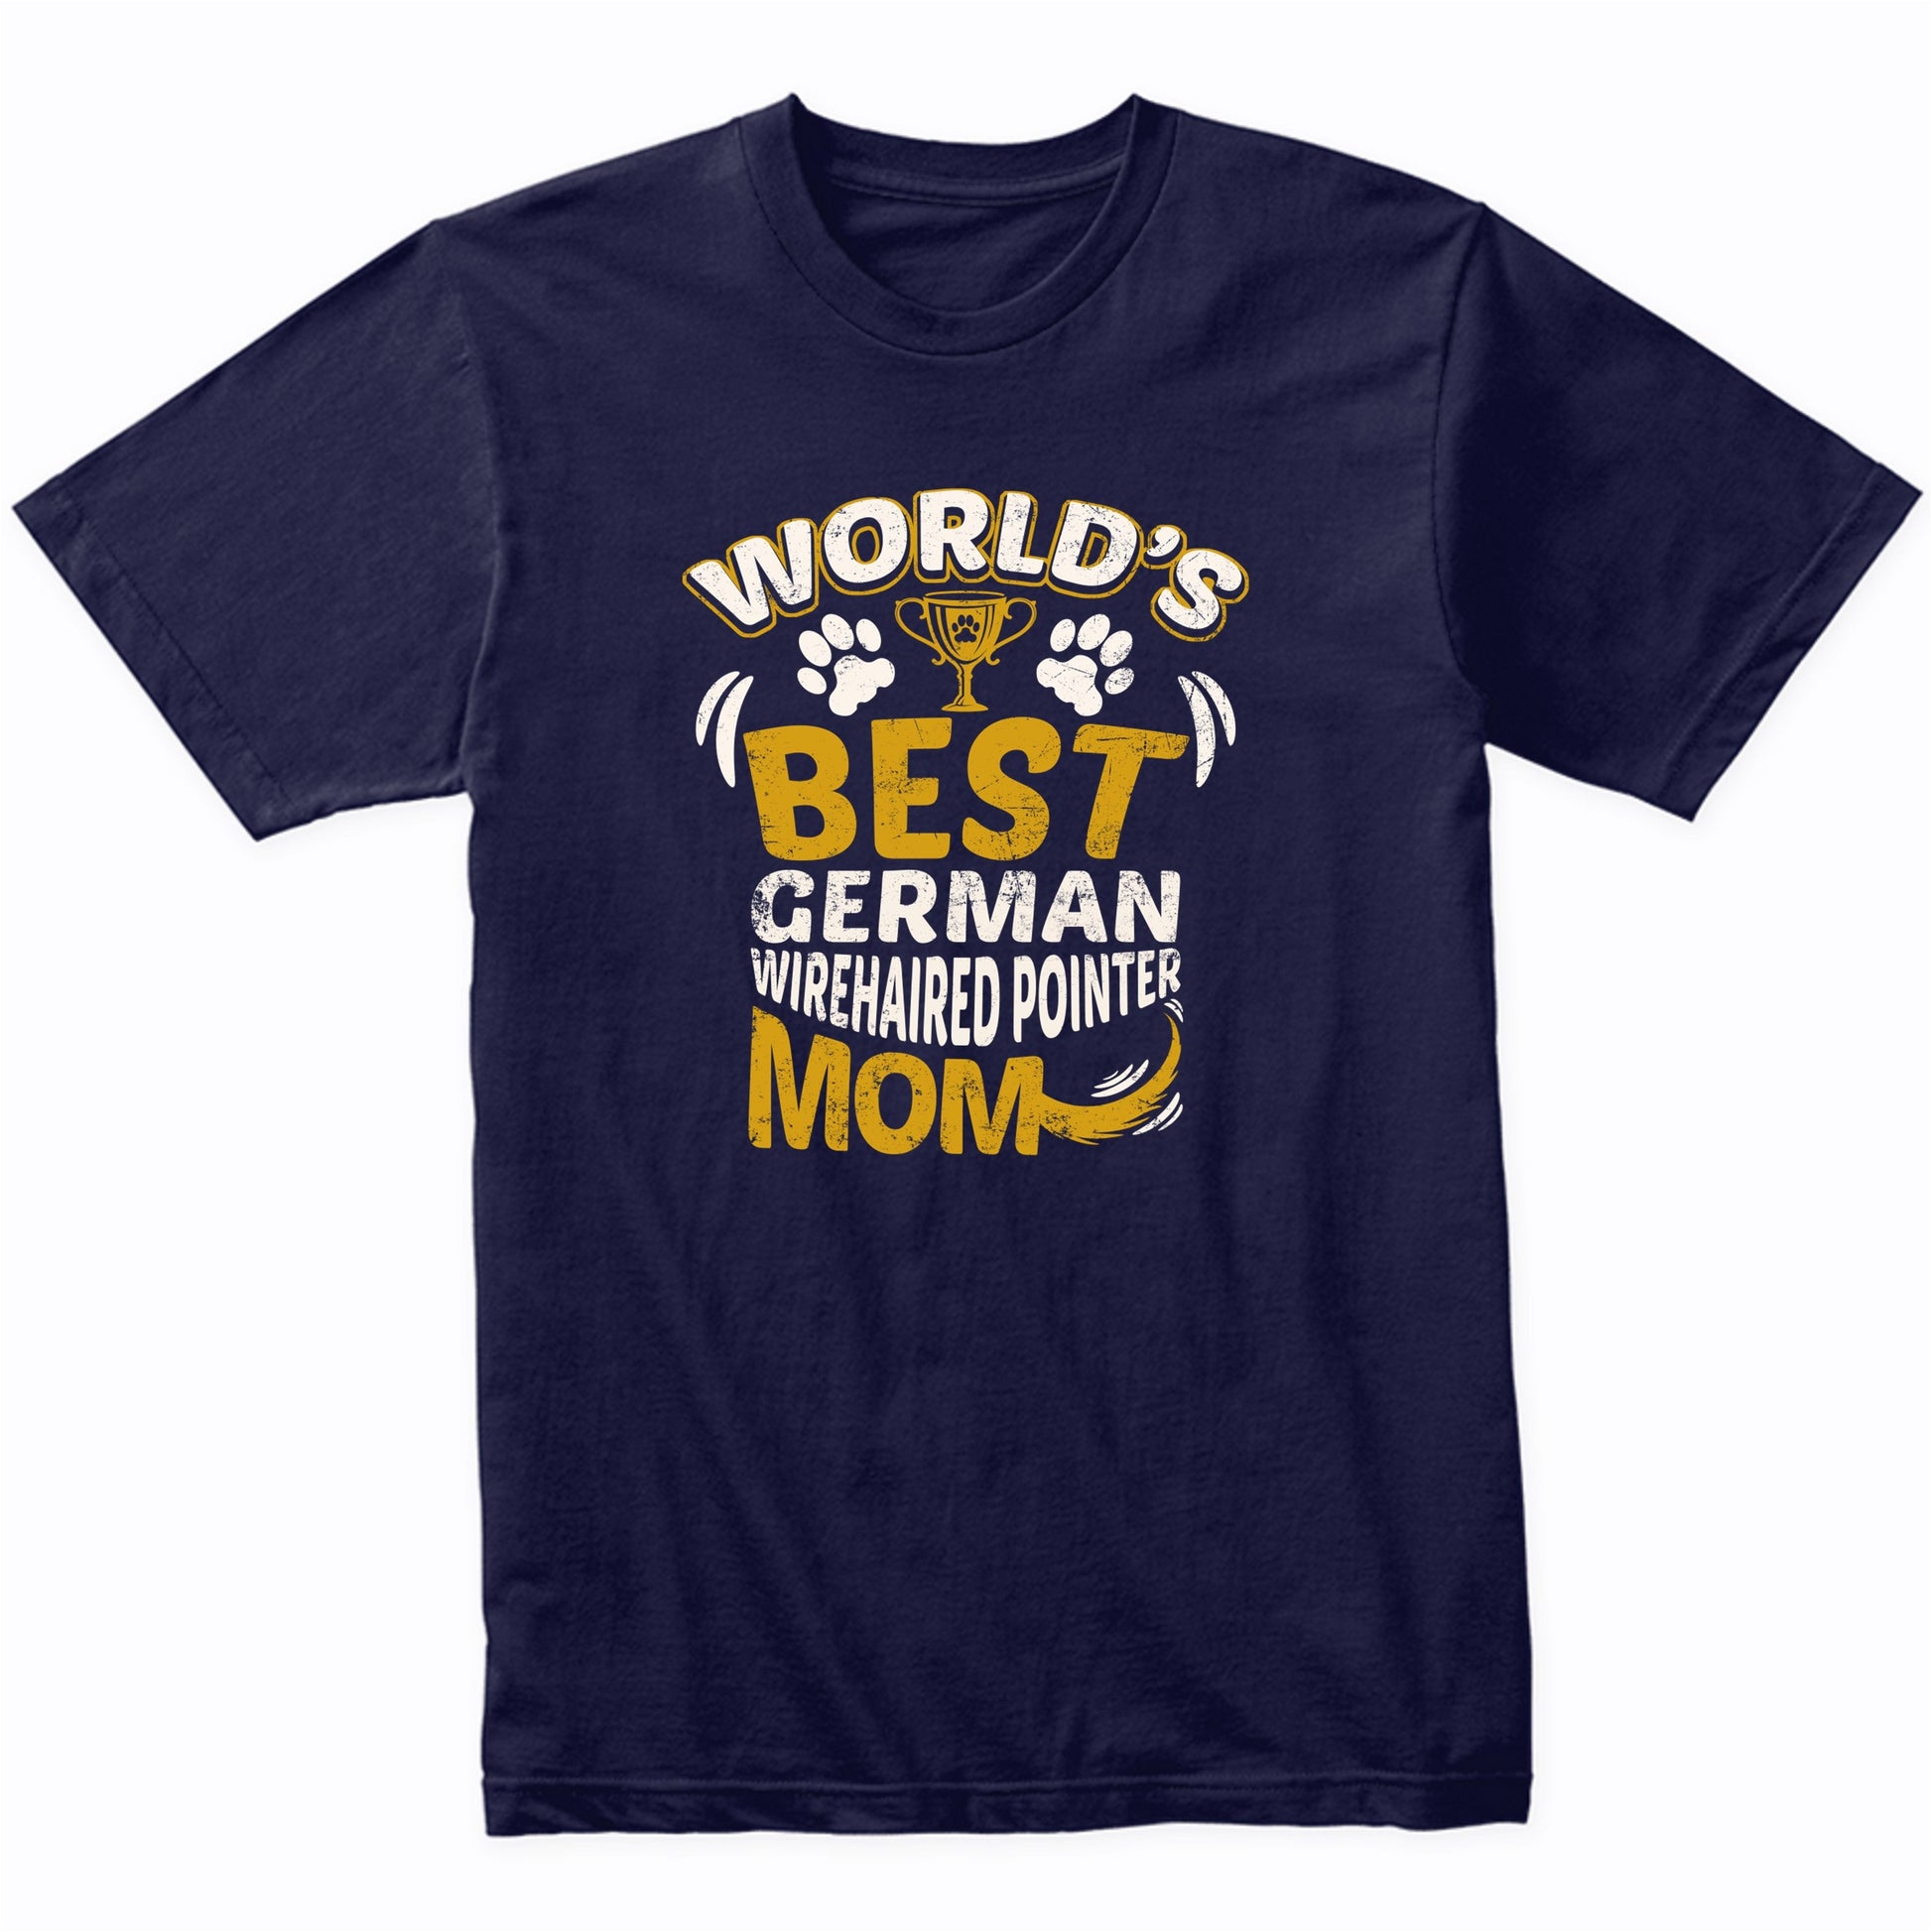 World's Best German Wirehaired Pointer Mom Graphic T-Shirt